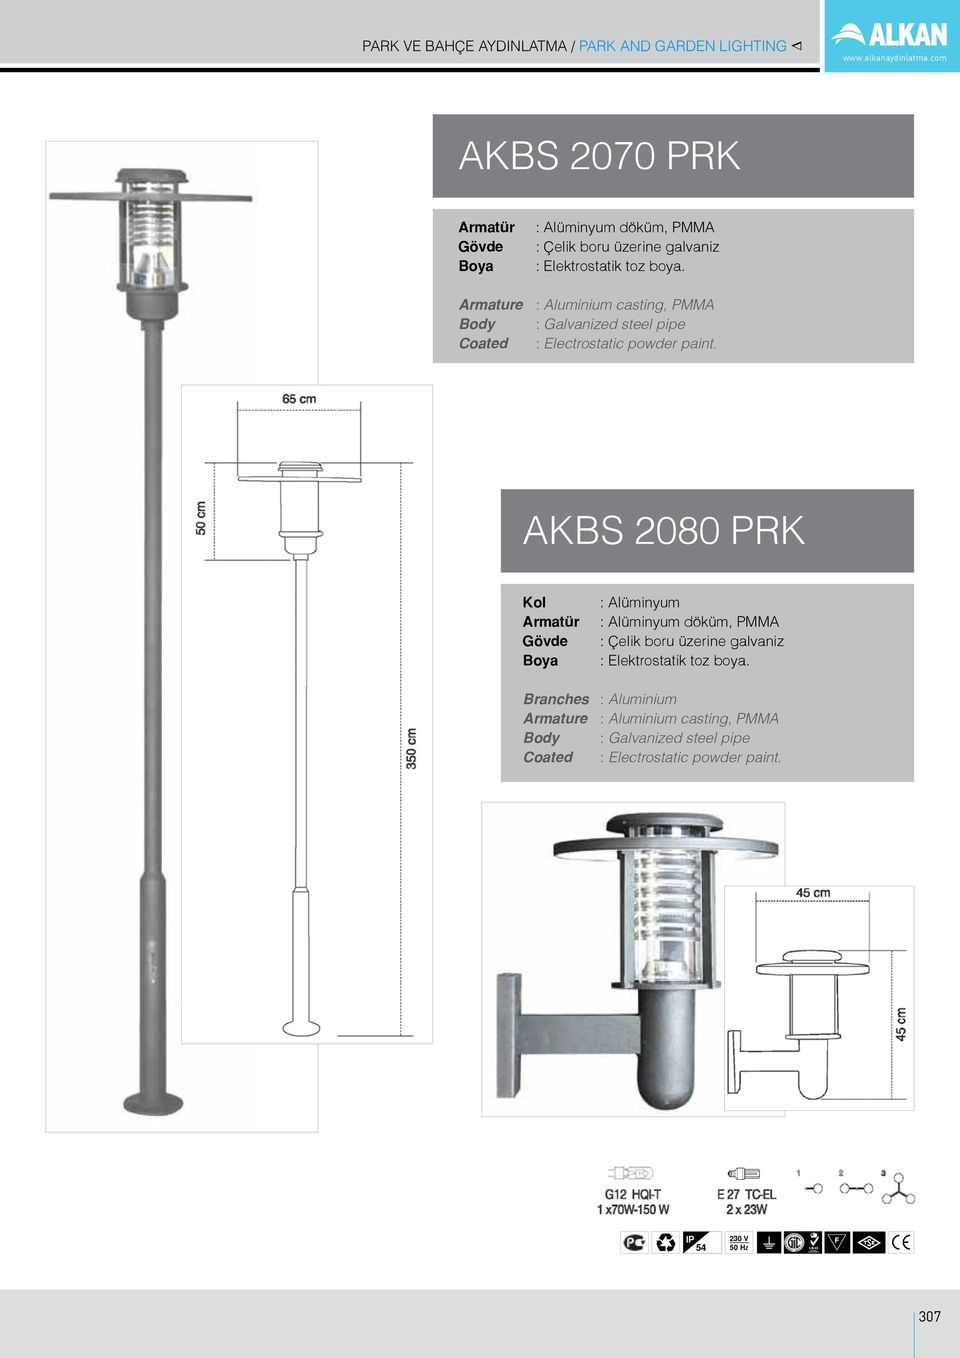 com AKBS 2070 PRK, PMMA Armature : Aluminium casting,